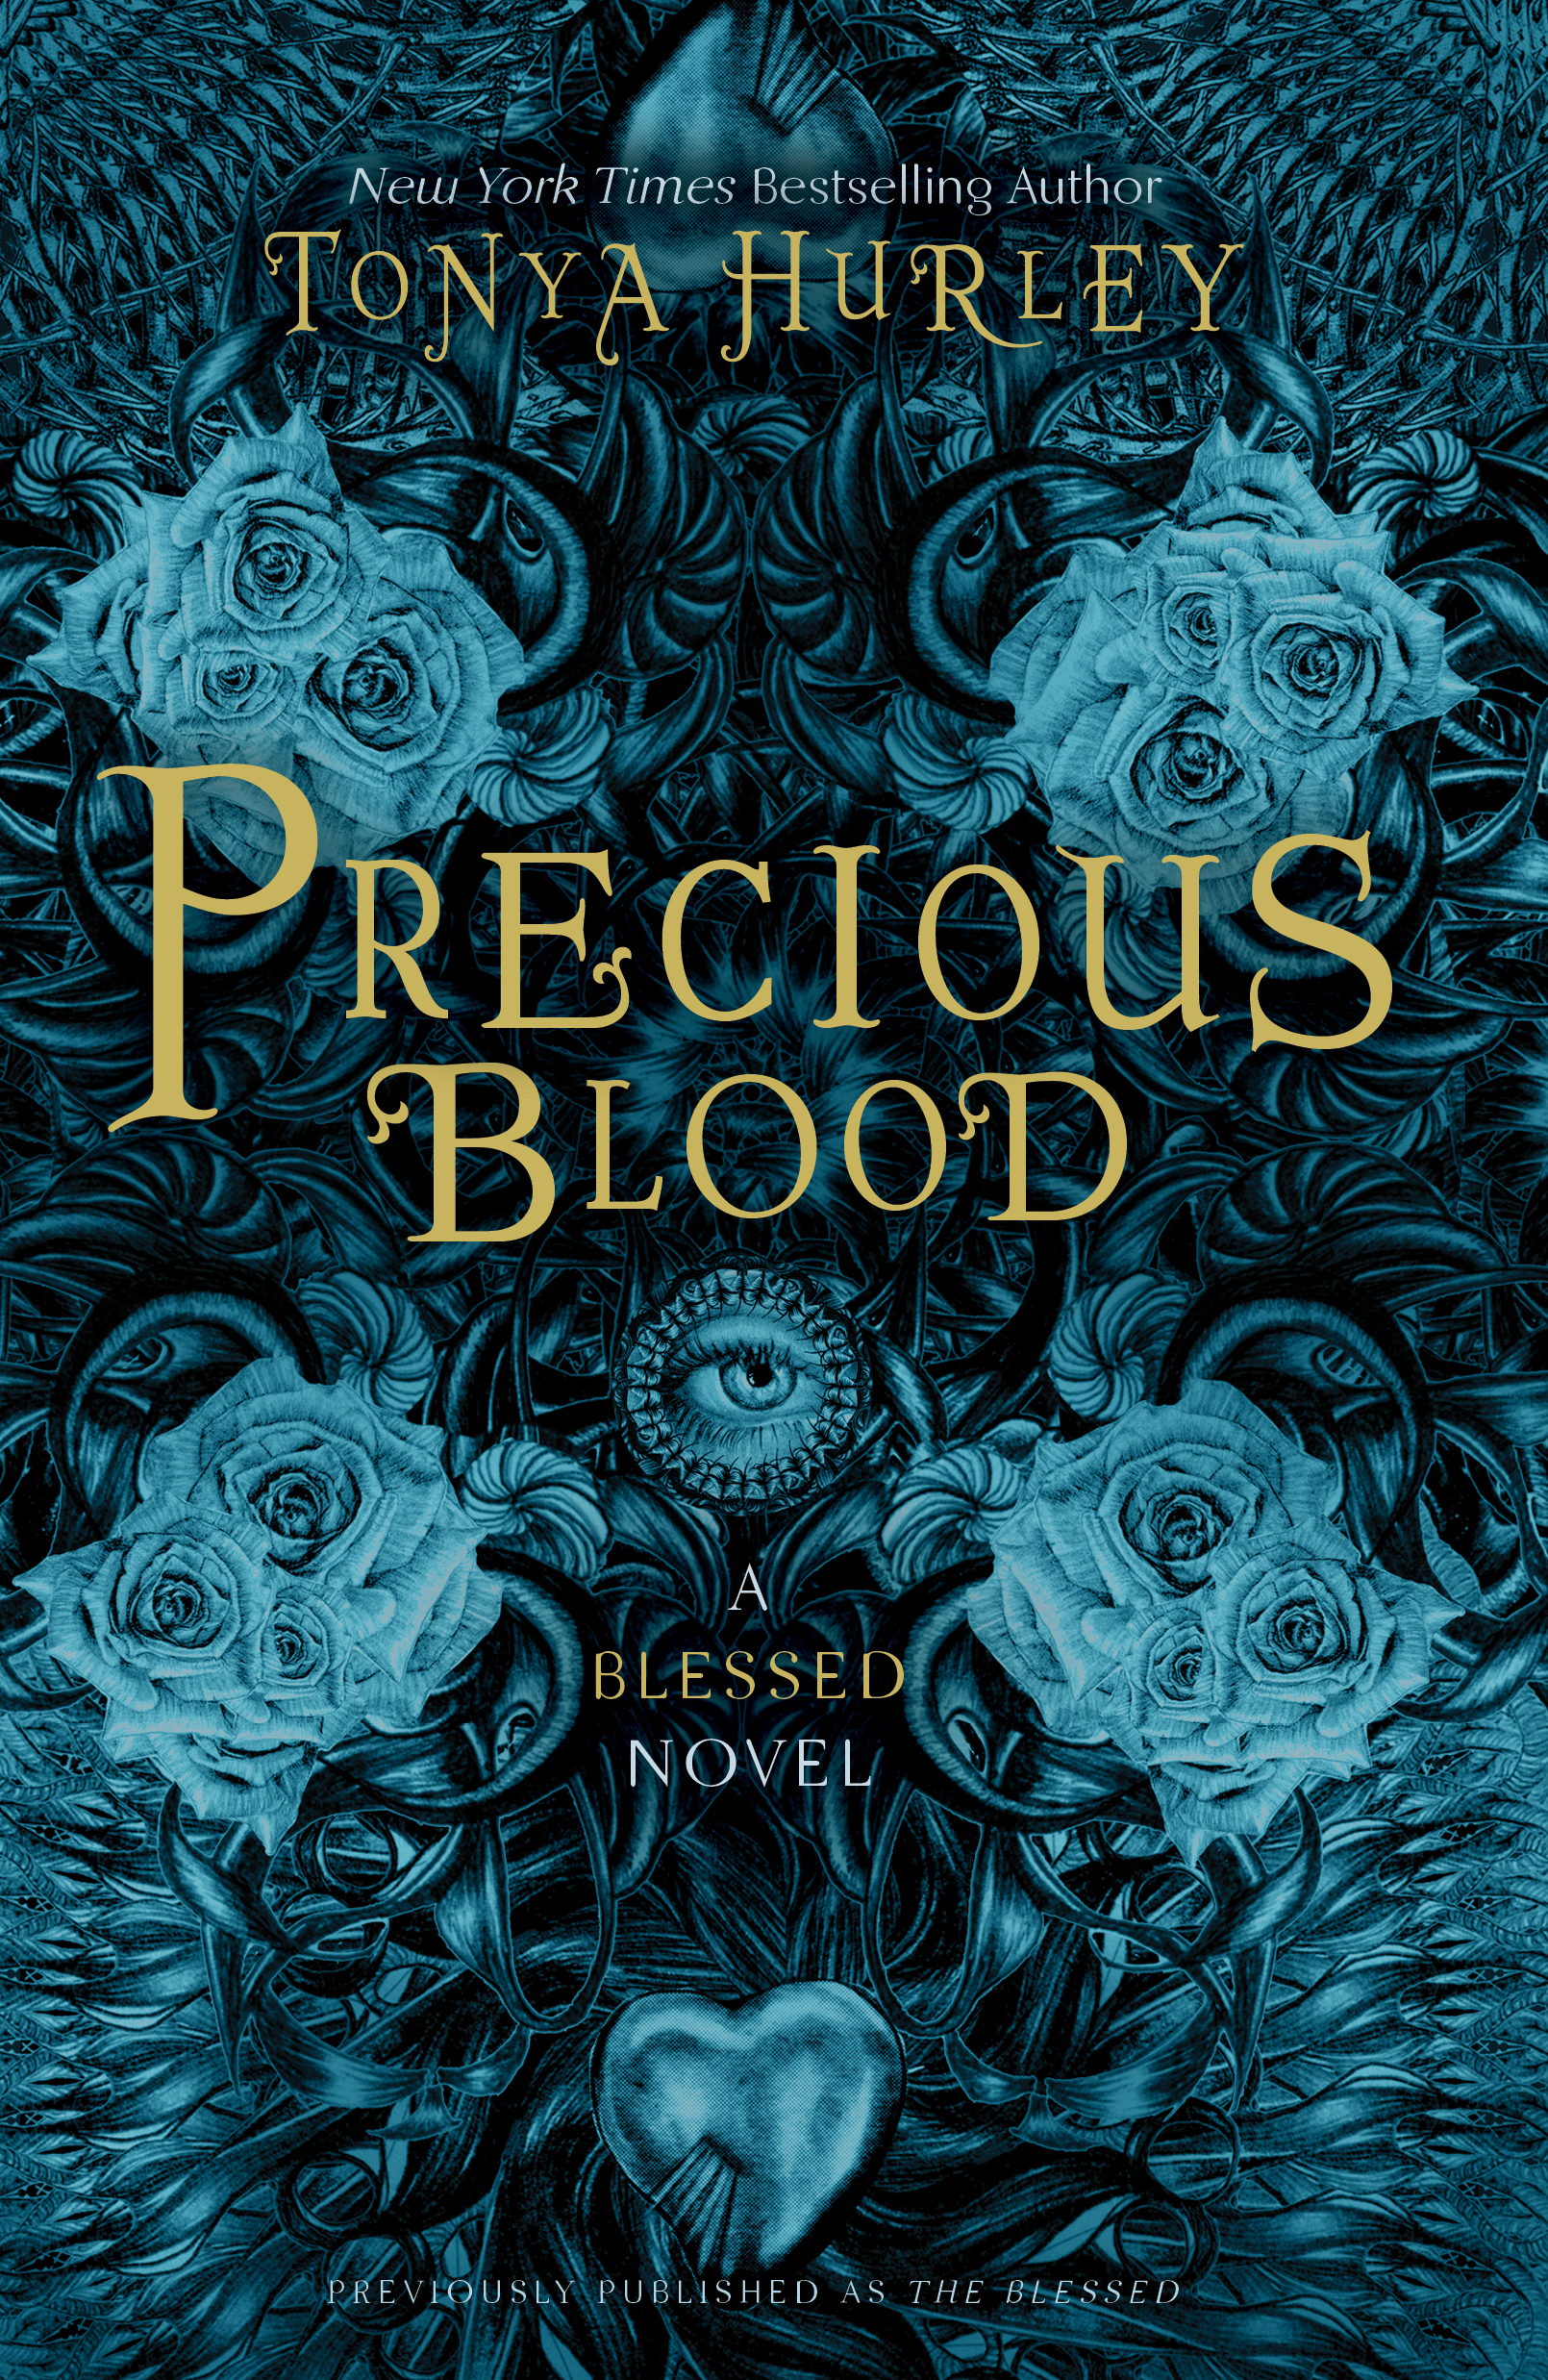 Precious Blood by Tonya Hurley